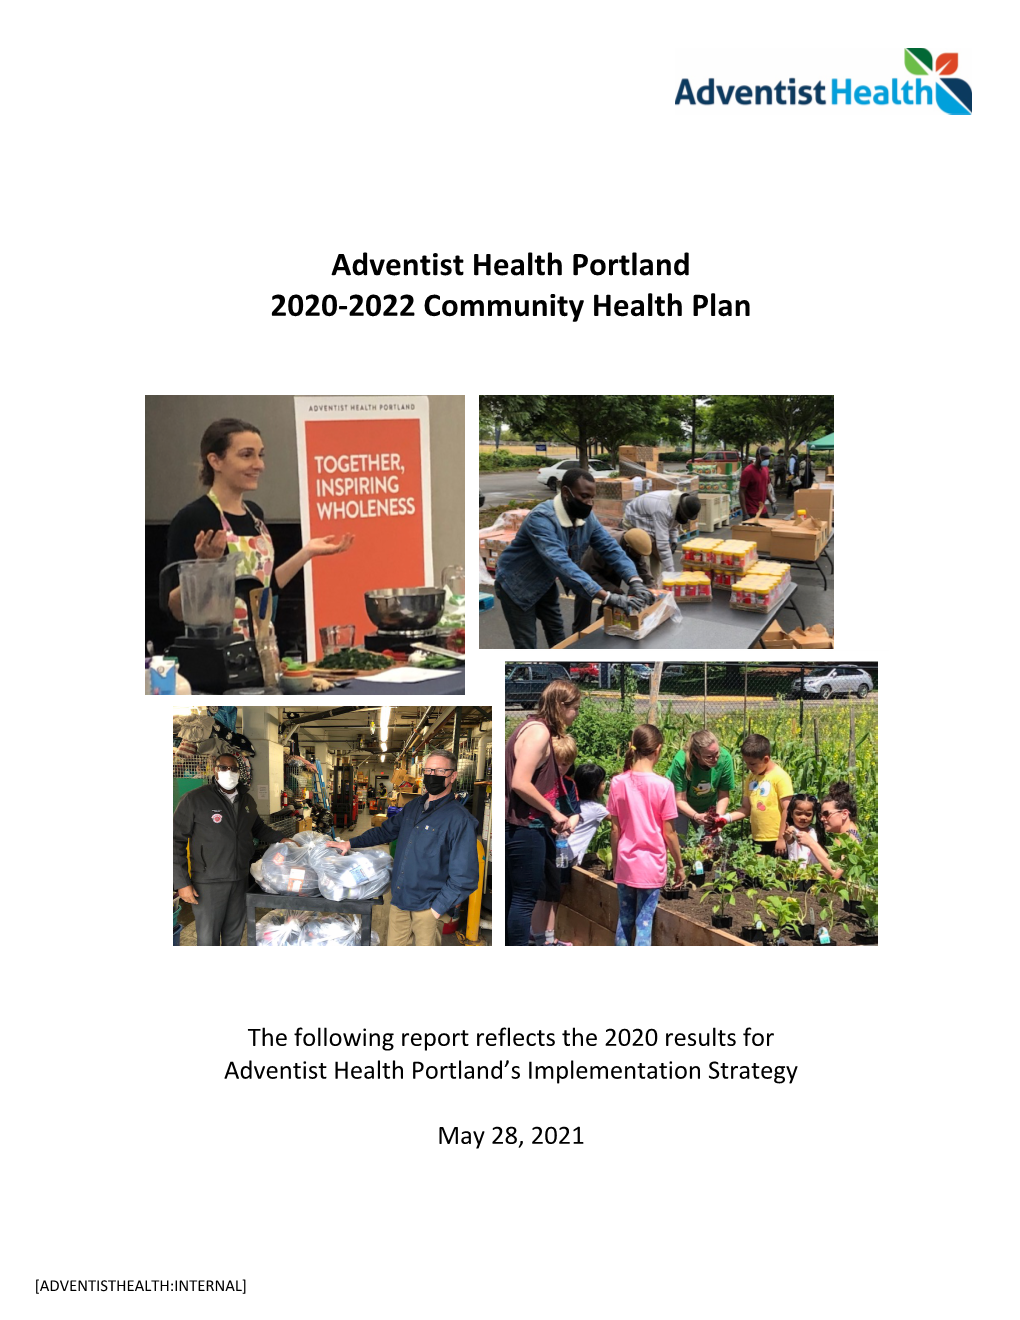 Adventist Health Portland 2020-2022 Community Health Plan